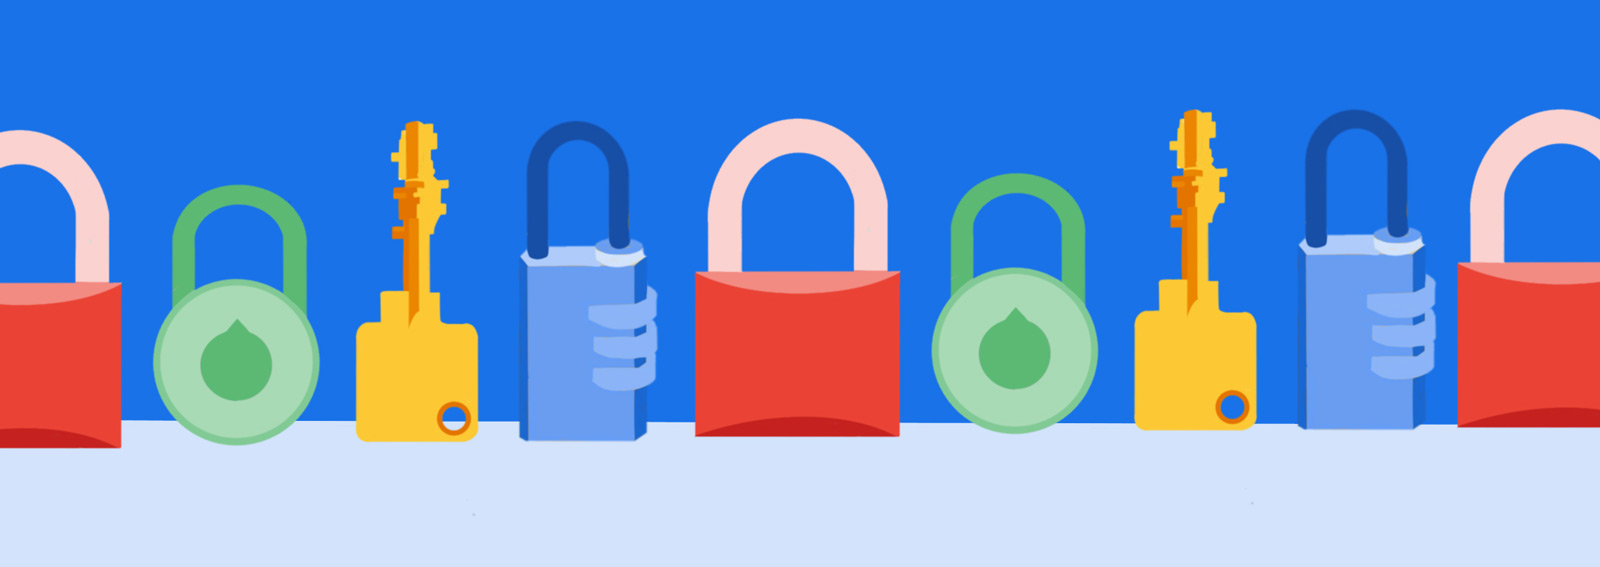 password-secure-google-internet-web